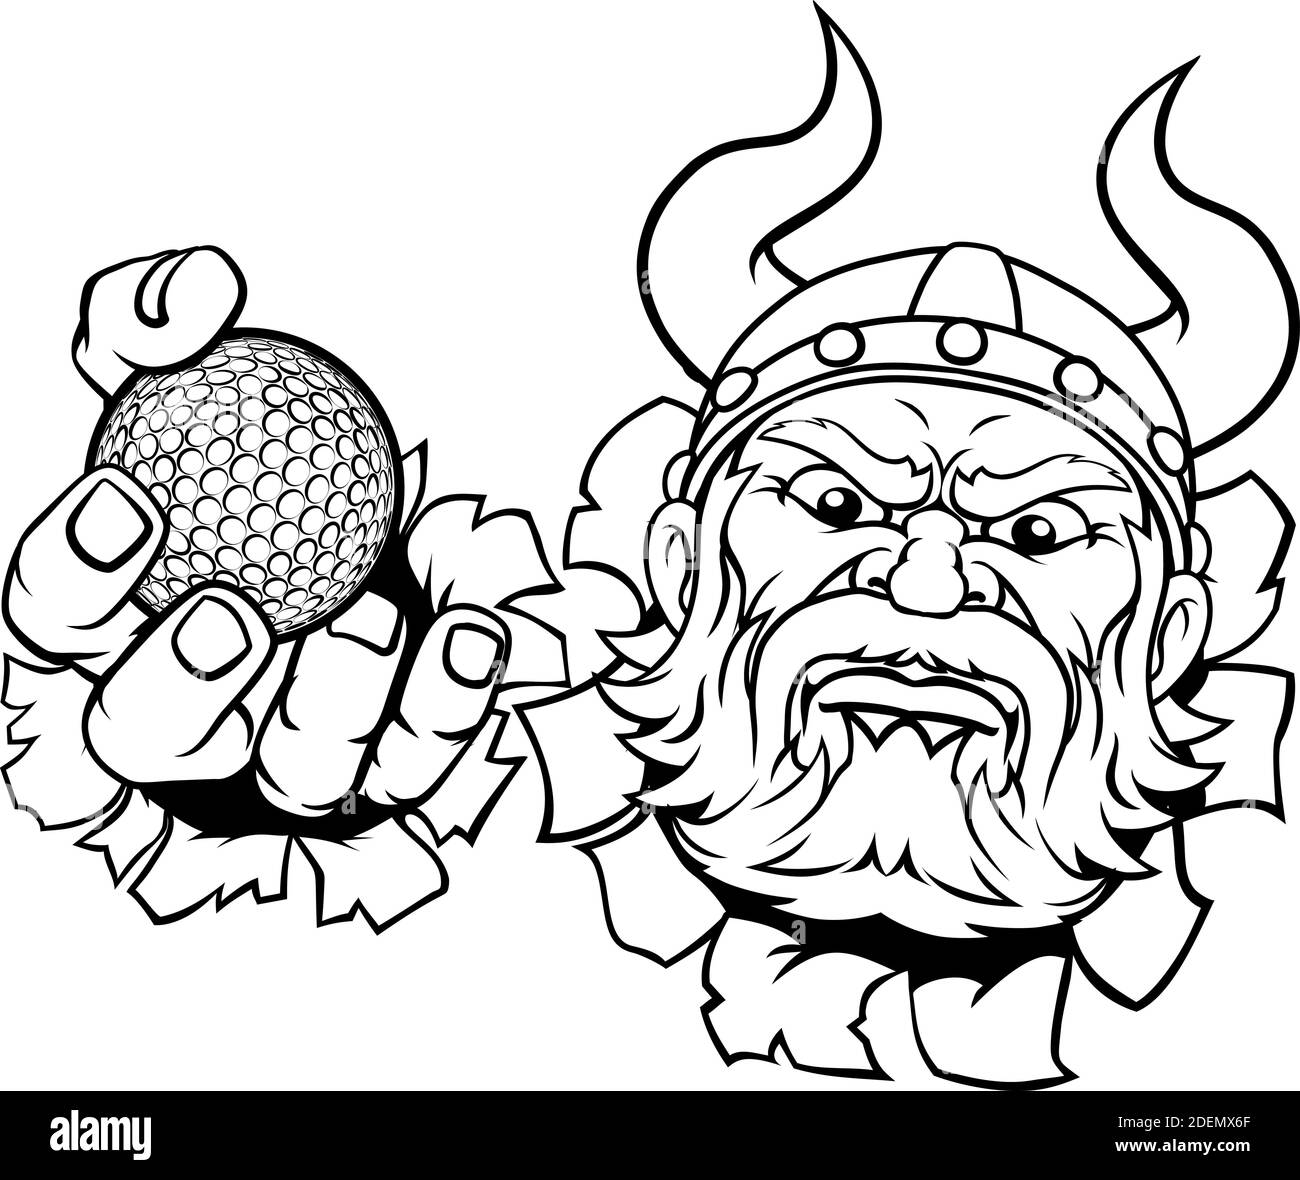 Viking Golf ball Sports Mascot Cartoon Illustration de Vecteur